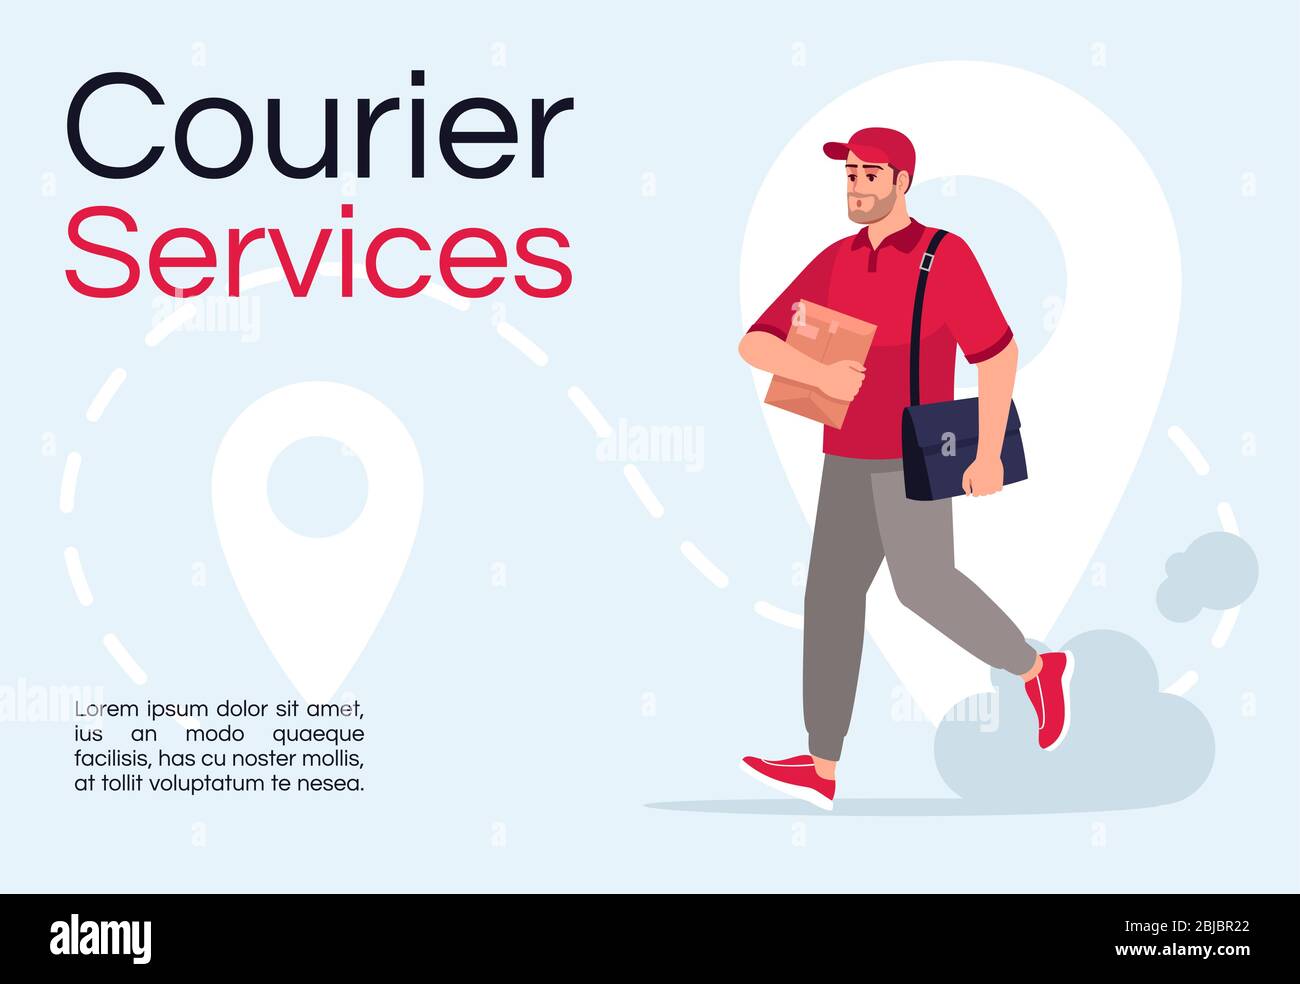 https://c8.alamy.com/comp/2BJBR22/courier-services-poster-template-2BJBR22.jpg